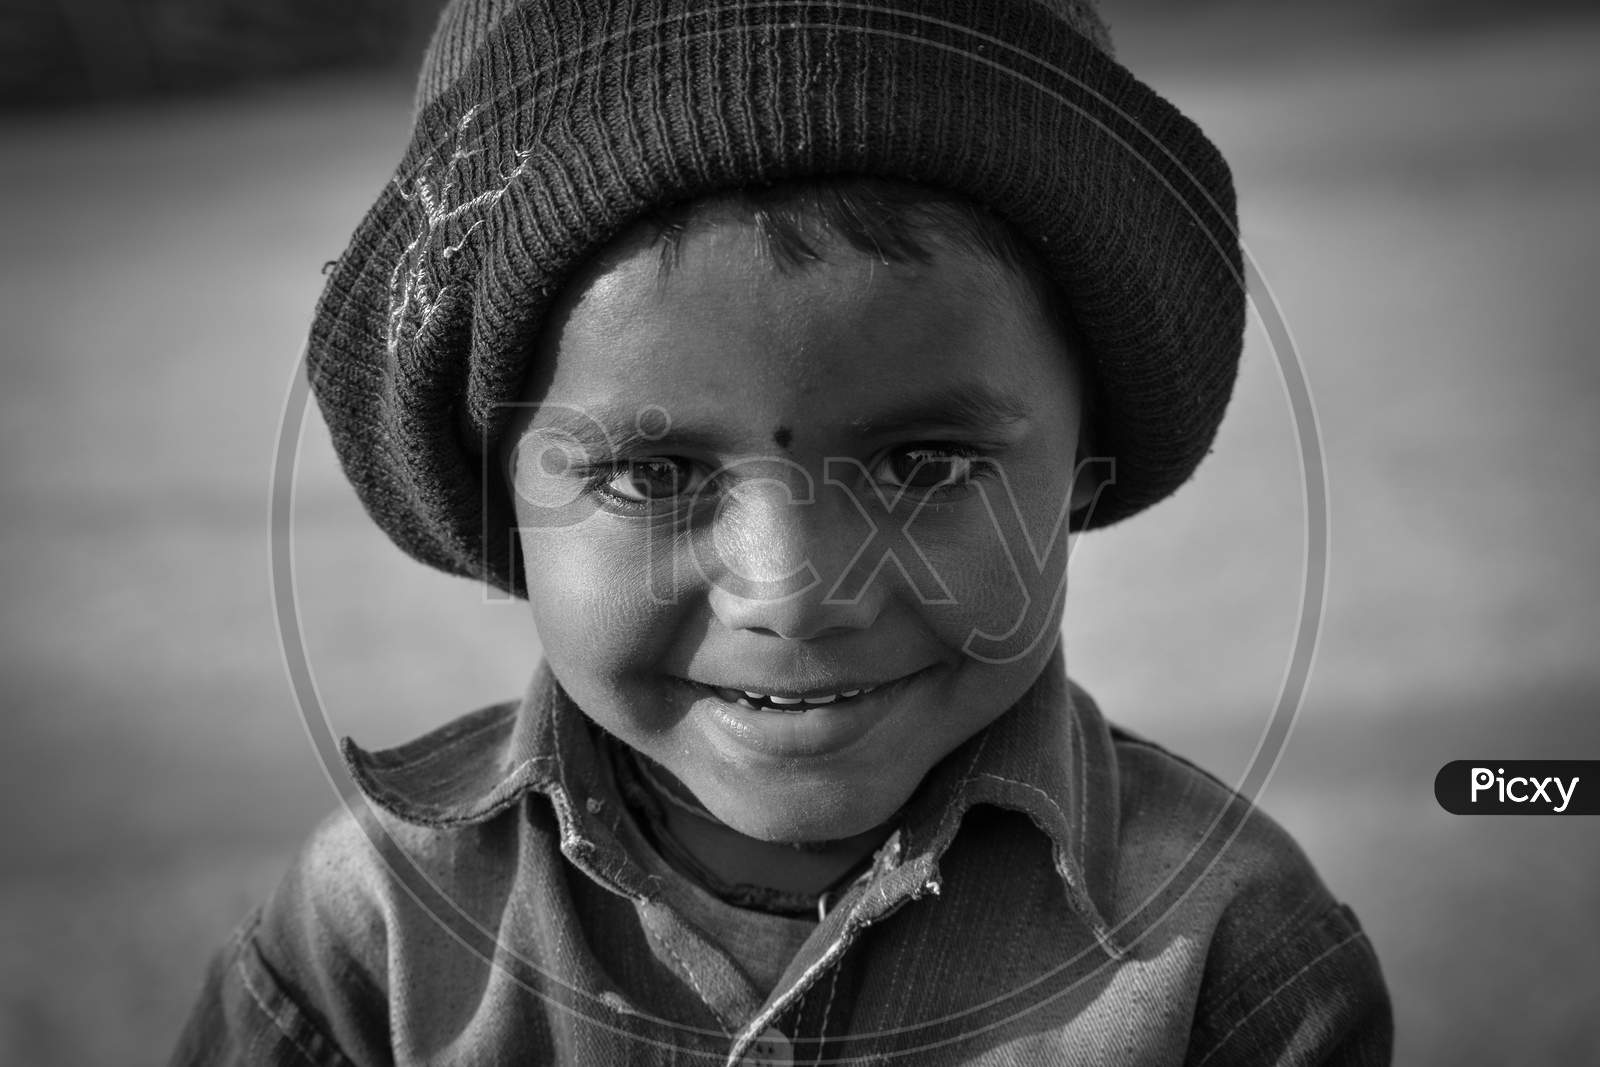 TIKAMGARH, MADHYA PRADESH, INDIA - FEBRUARY 11, 2020: Portrait of a little boy in black and white.